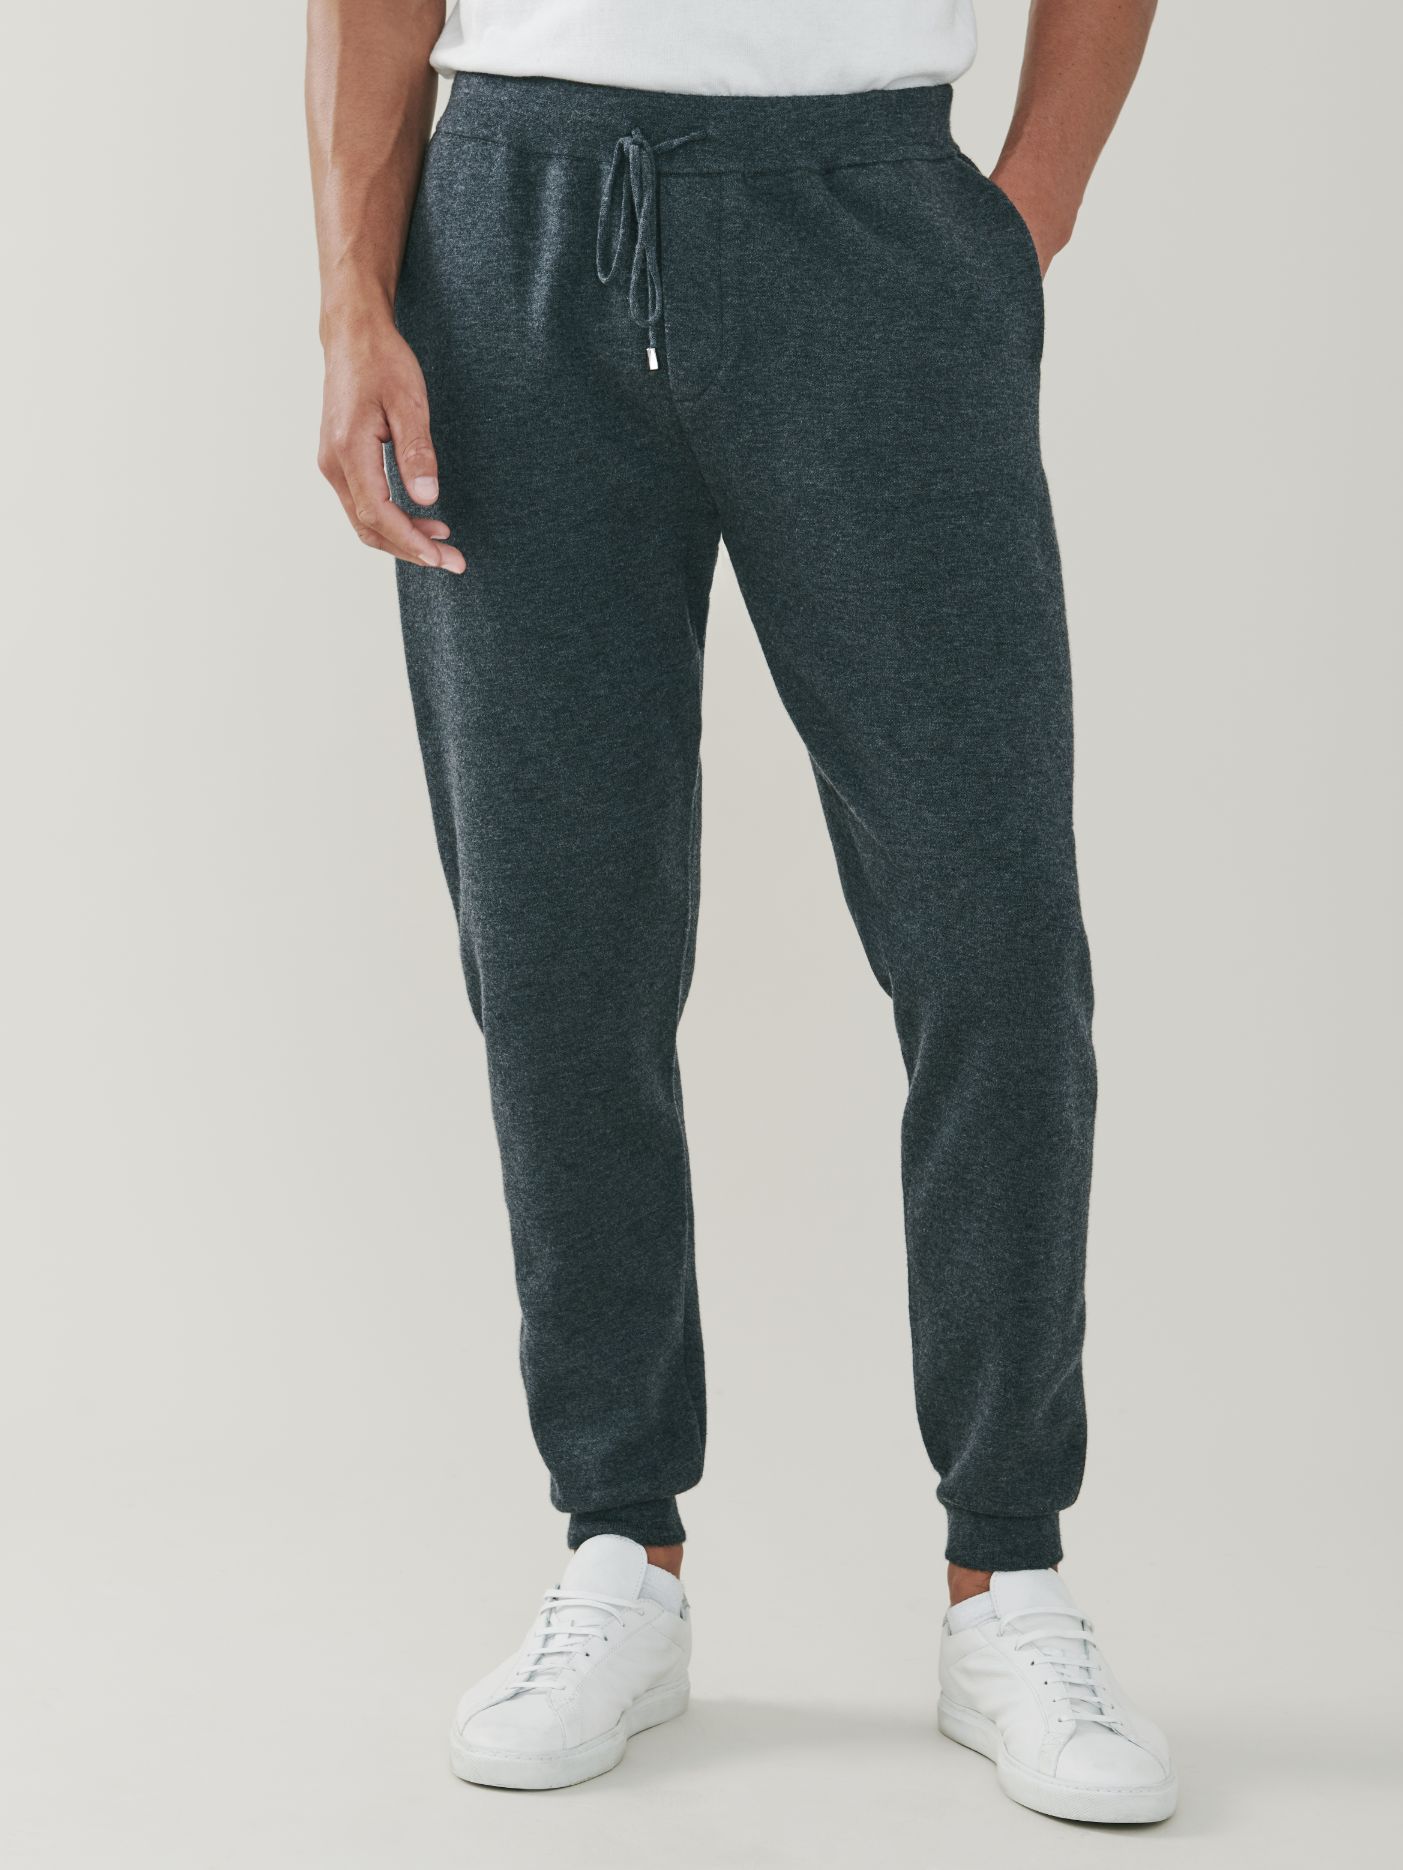 Men’s gray melange cashmere blend joggers